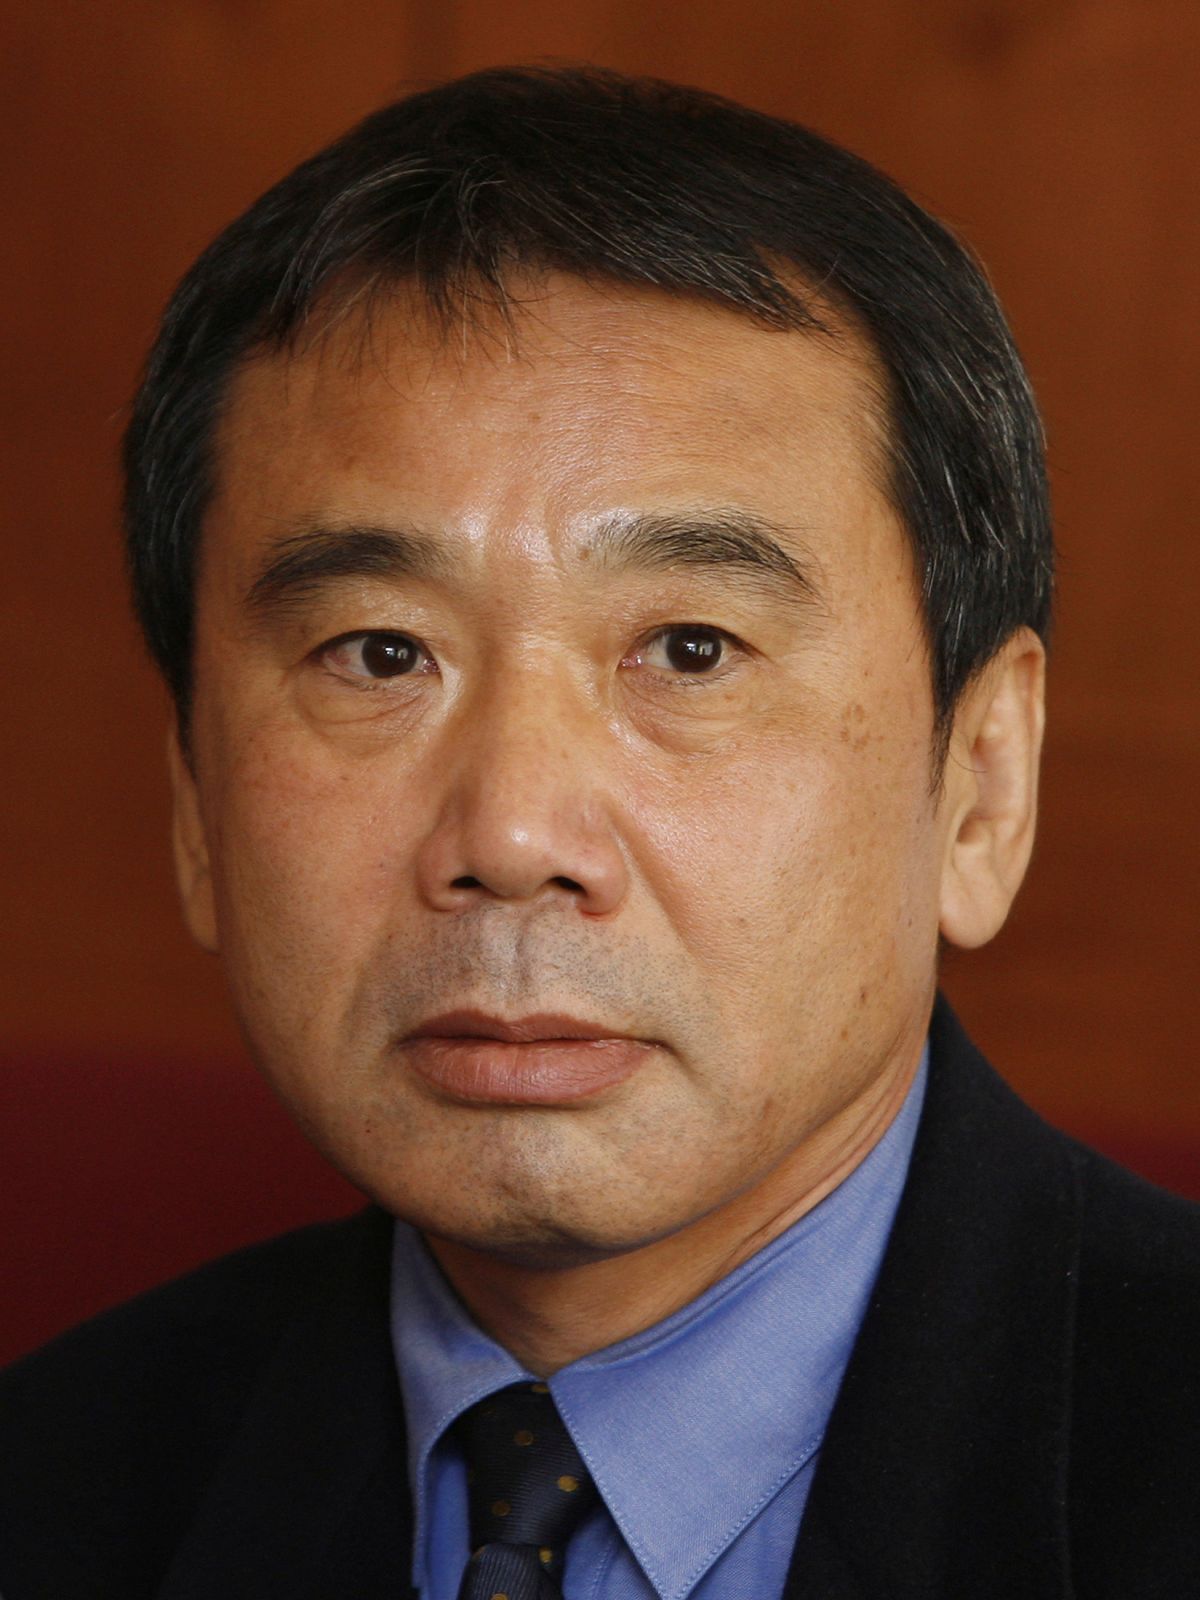 Murakami-sensei, Let’s Meet Again!